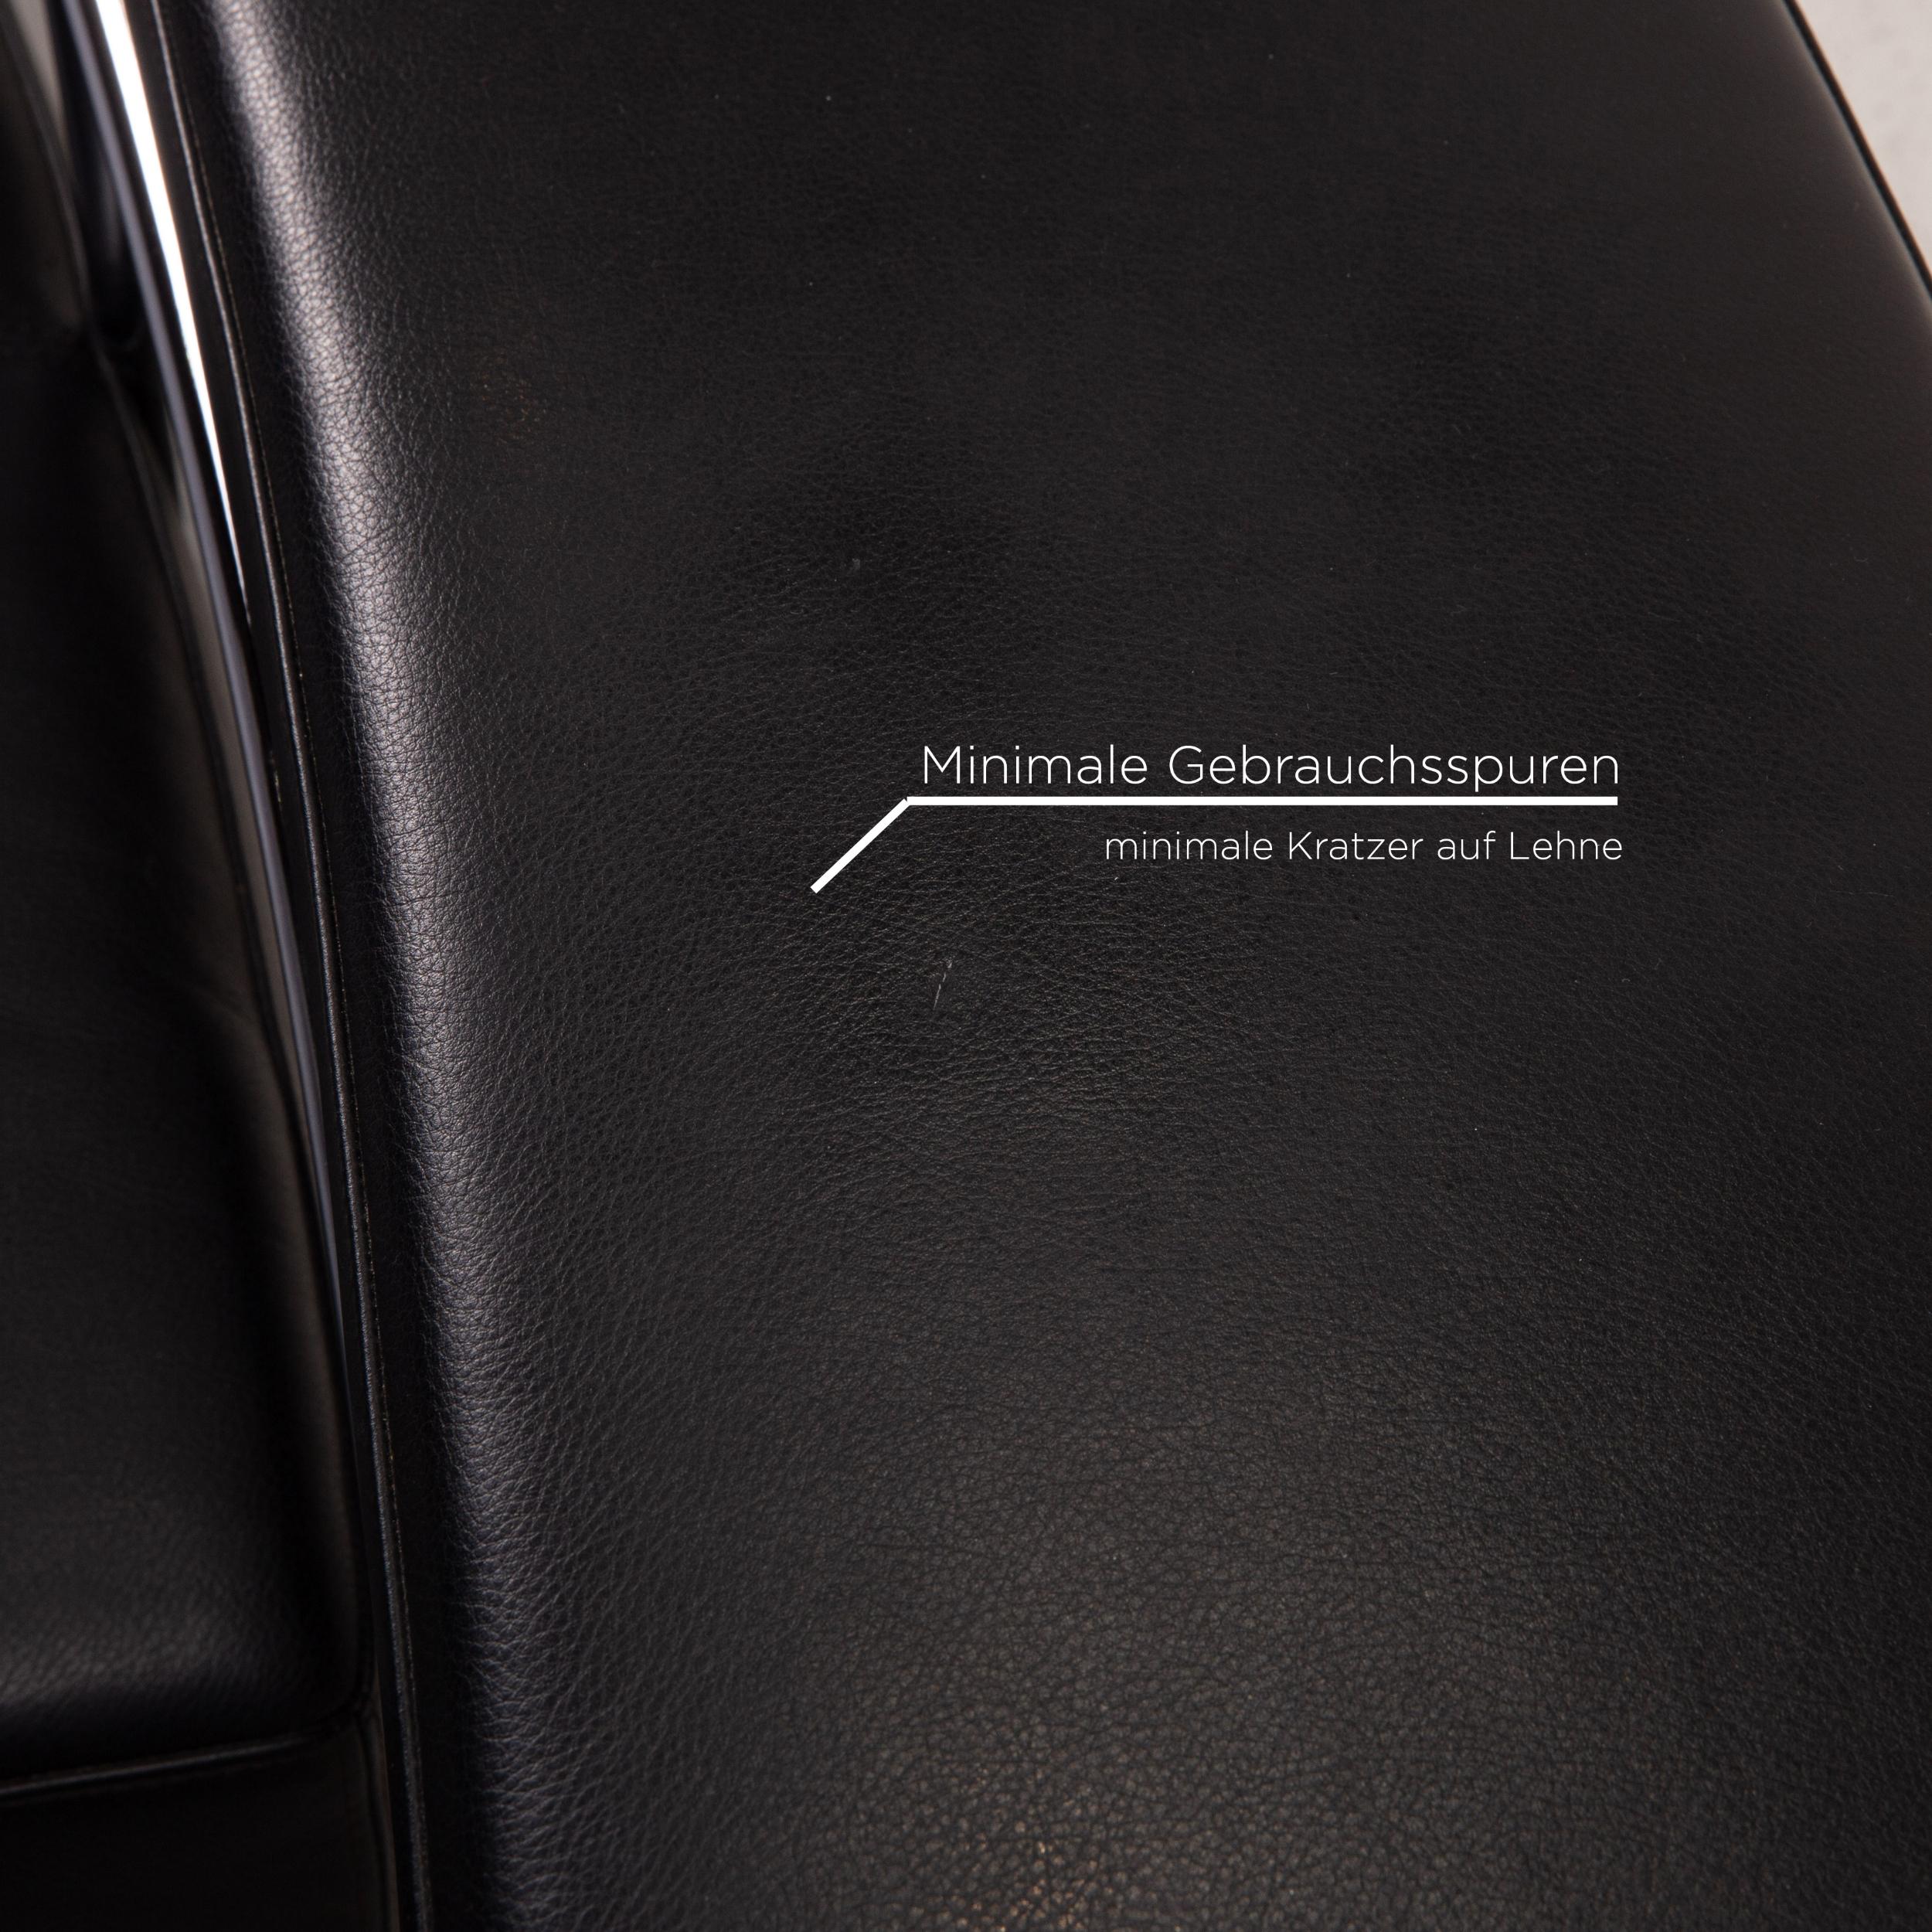 European ClassiCon Monte Carlo Leather Sofas Black Four-Seat Couch